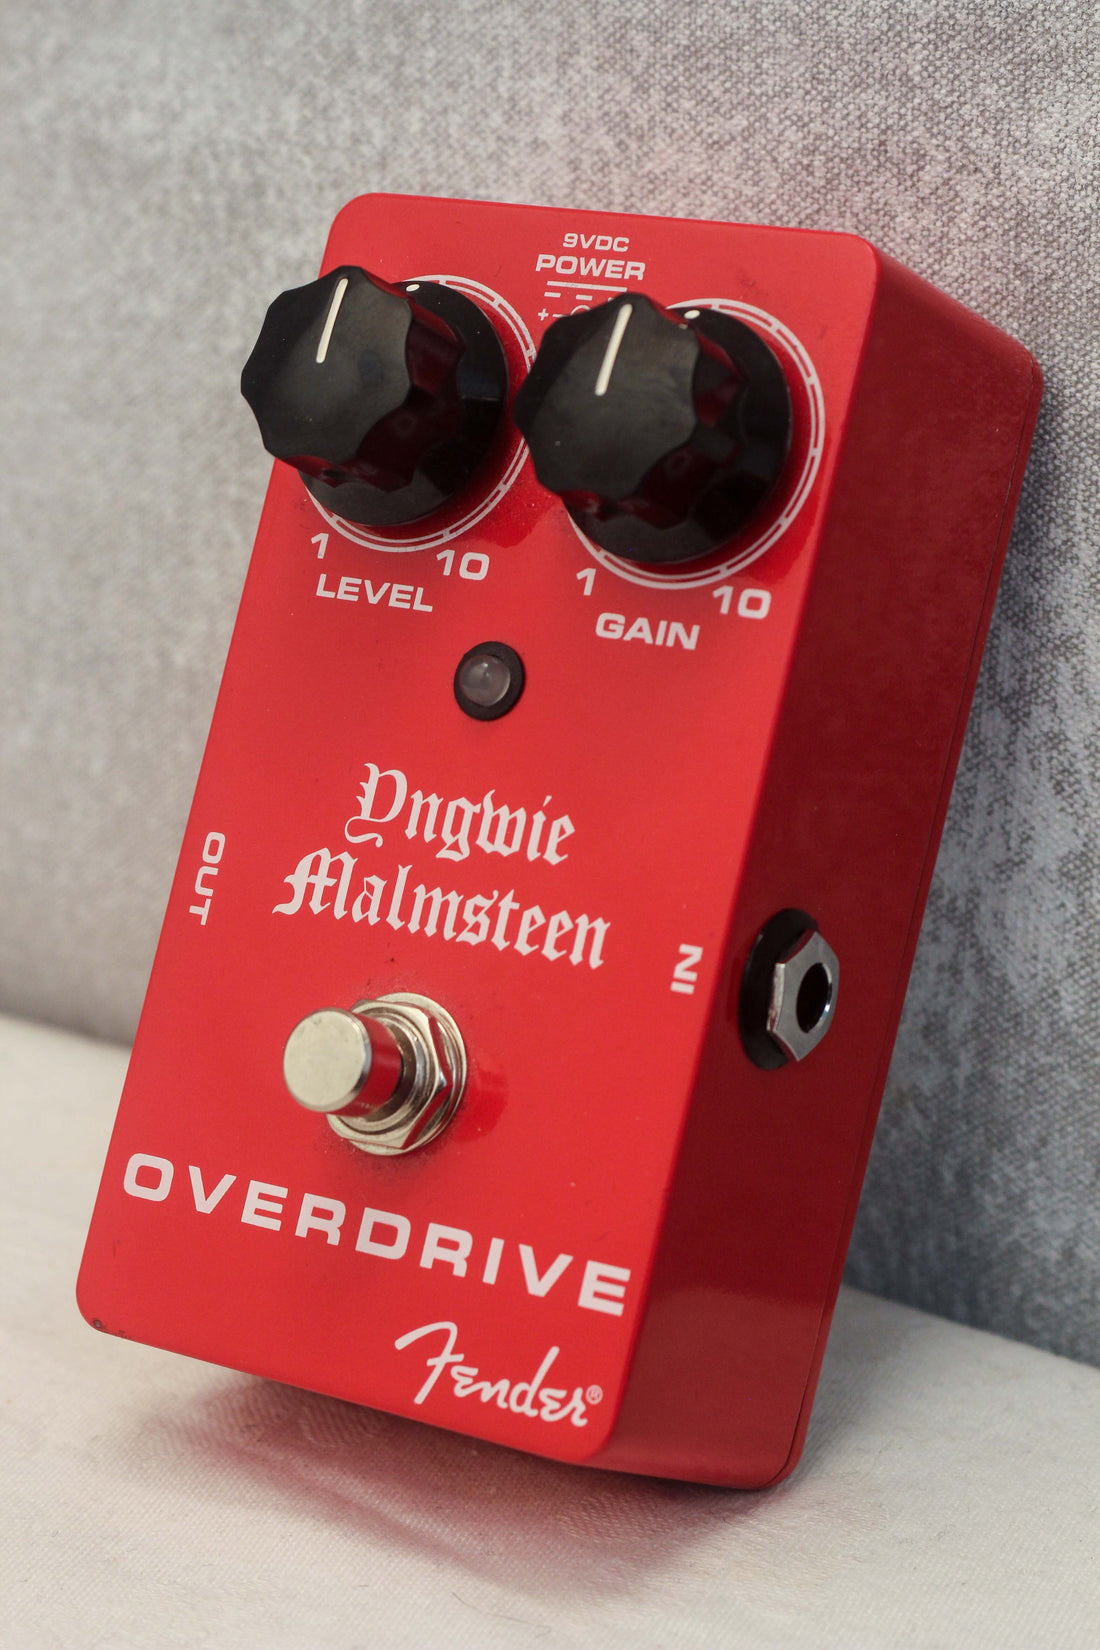 Fender Yngwie Malmsteen Overdrive Pedal